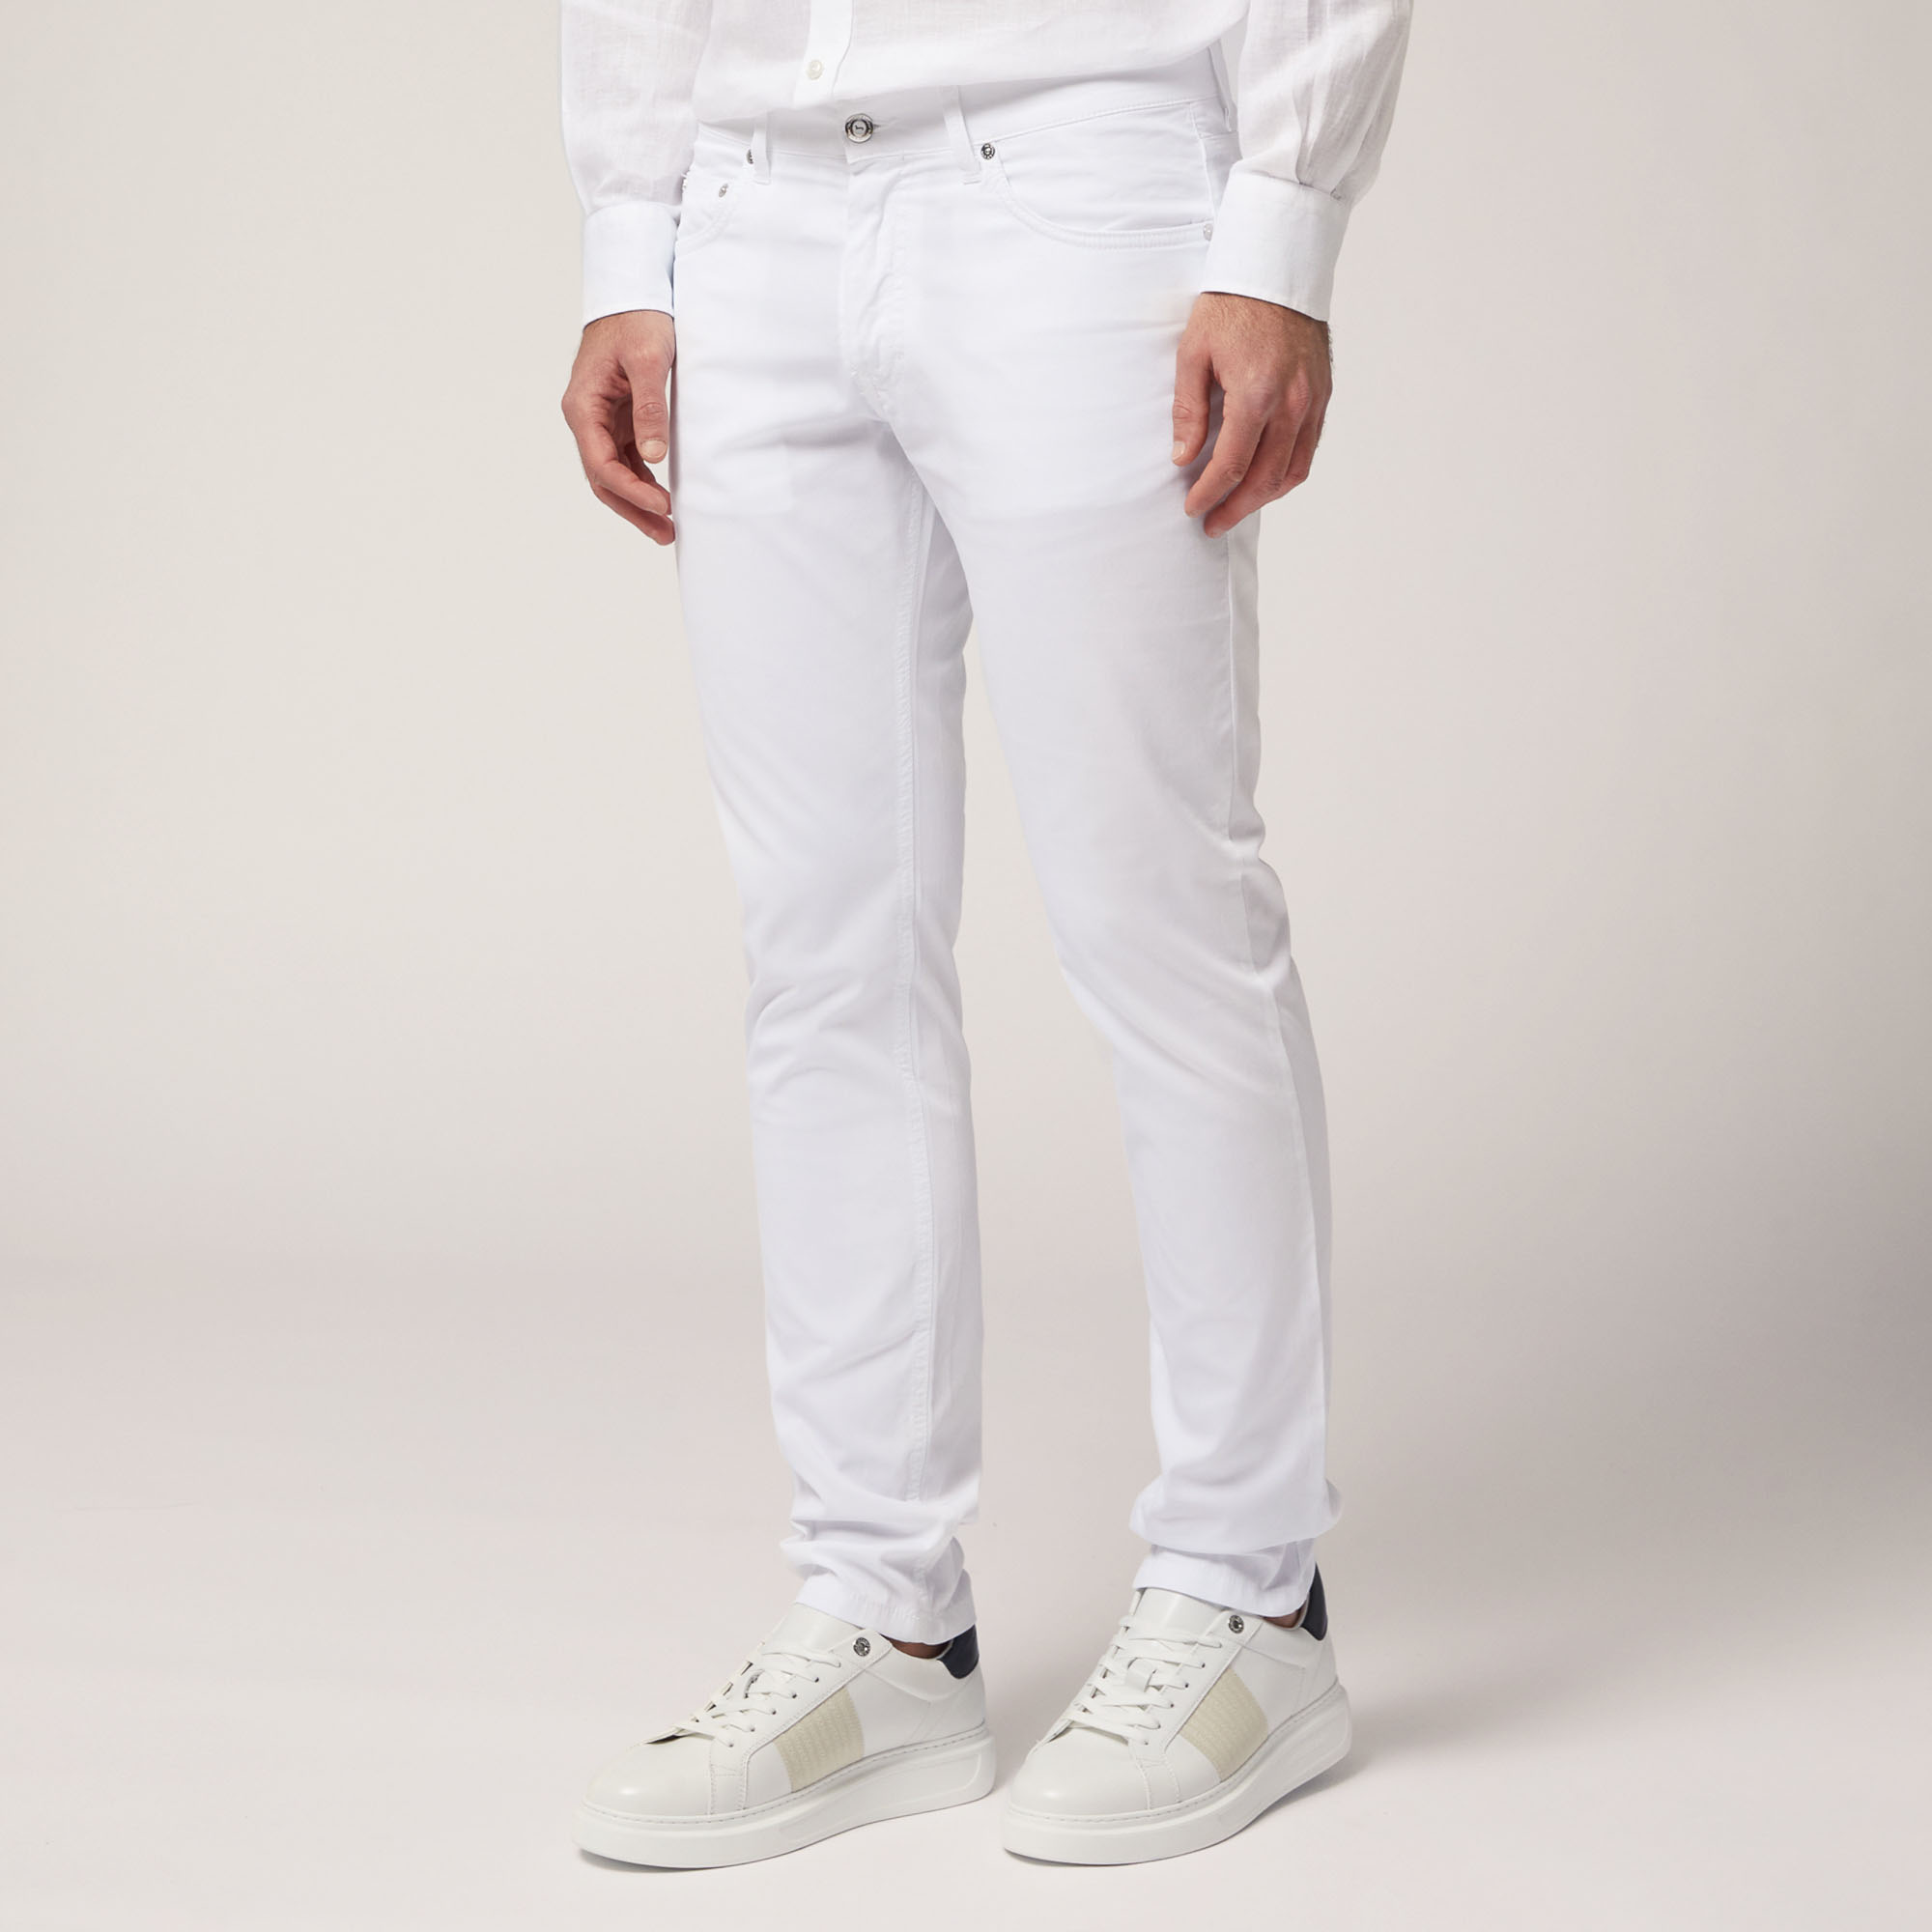 Narrow Five-Pocket Pants, White, large